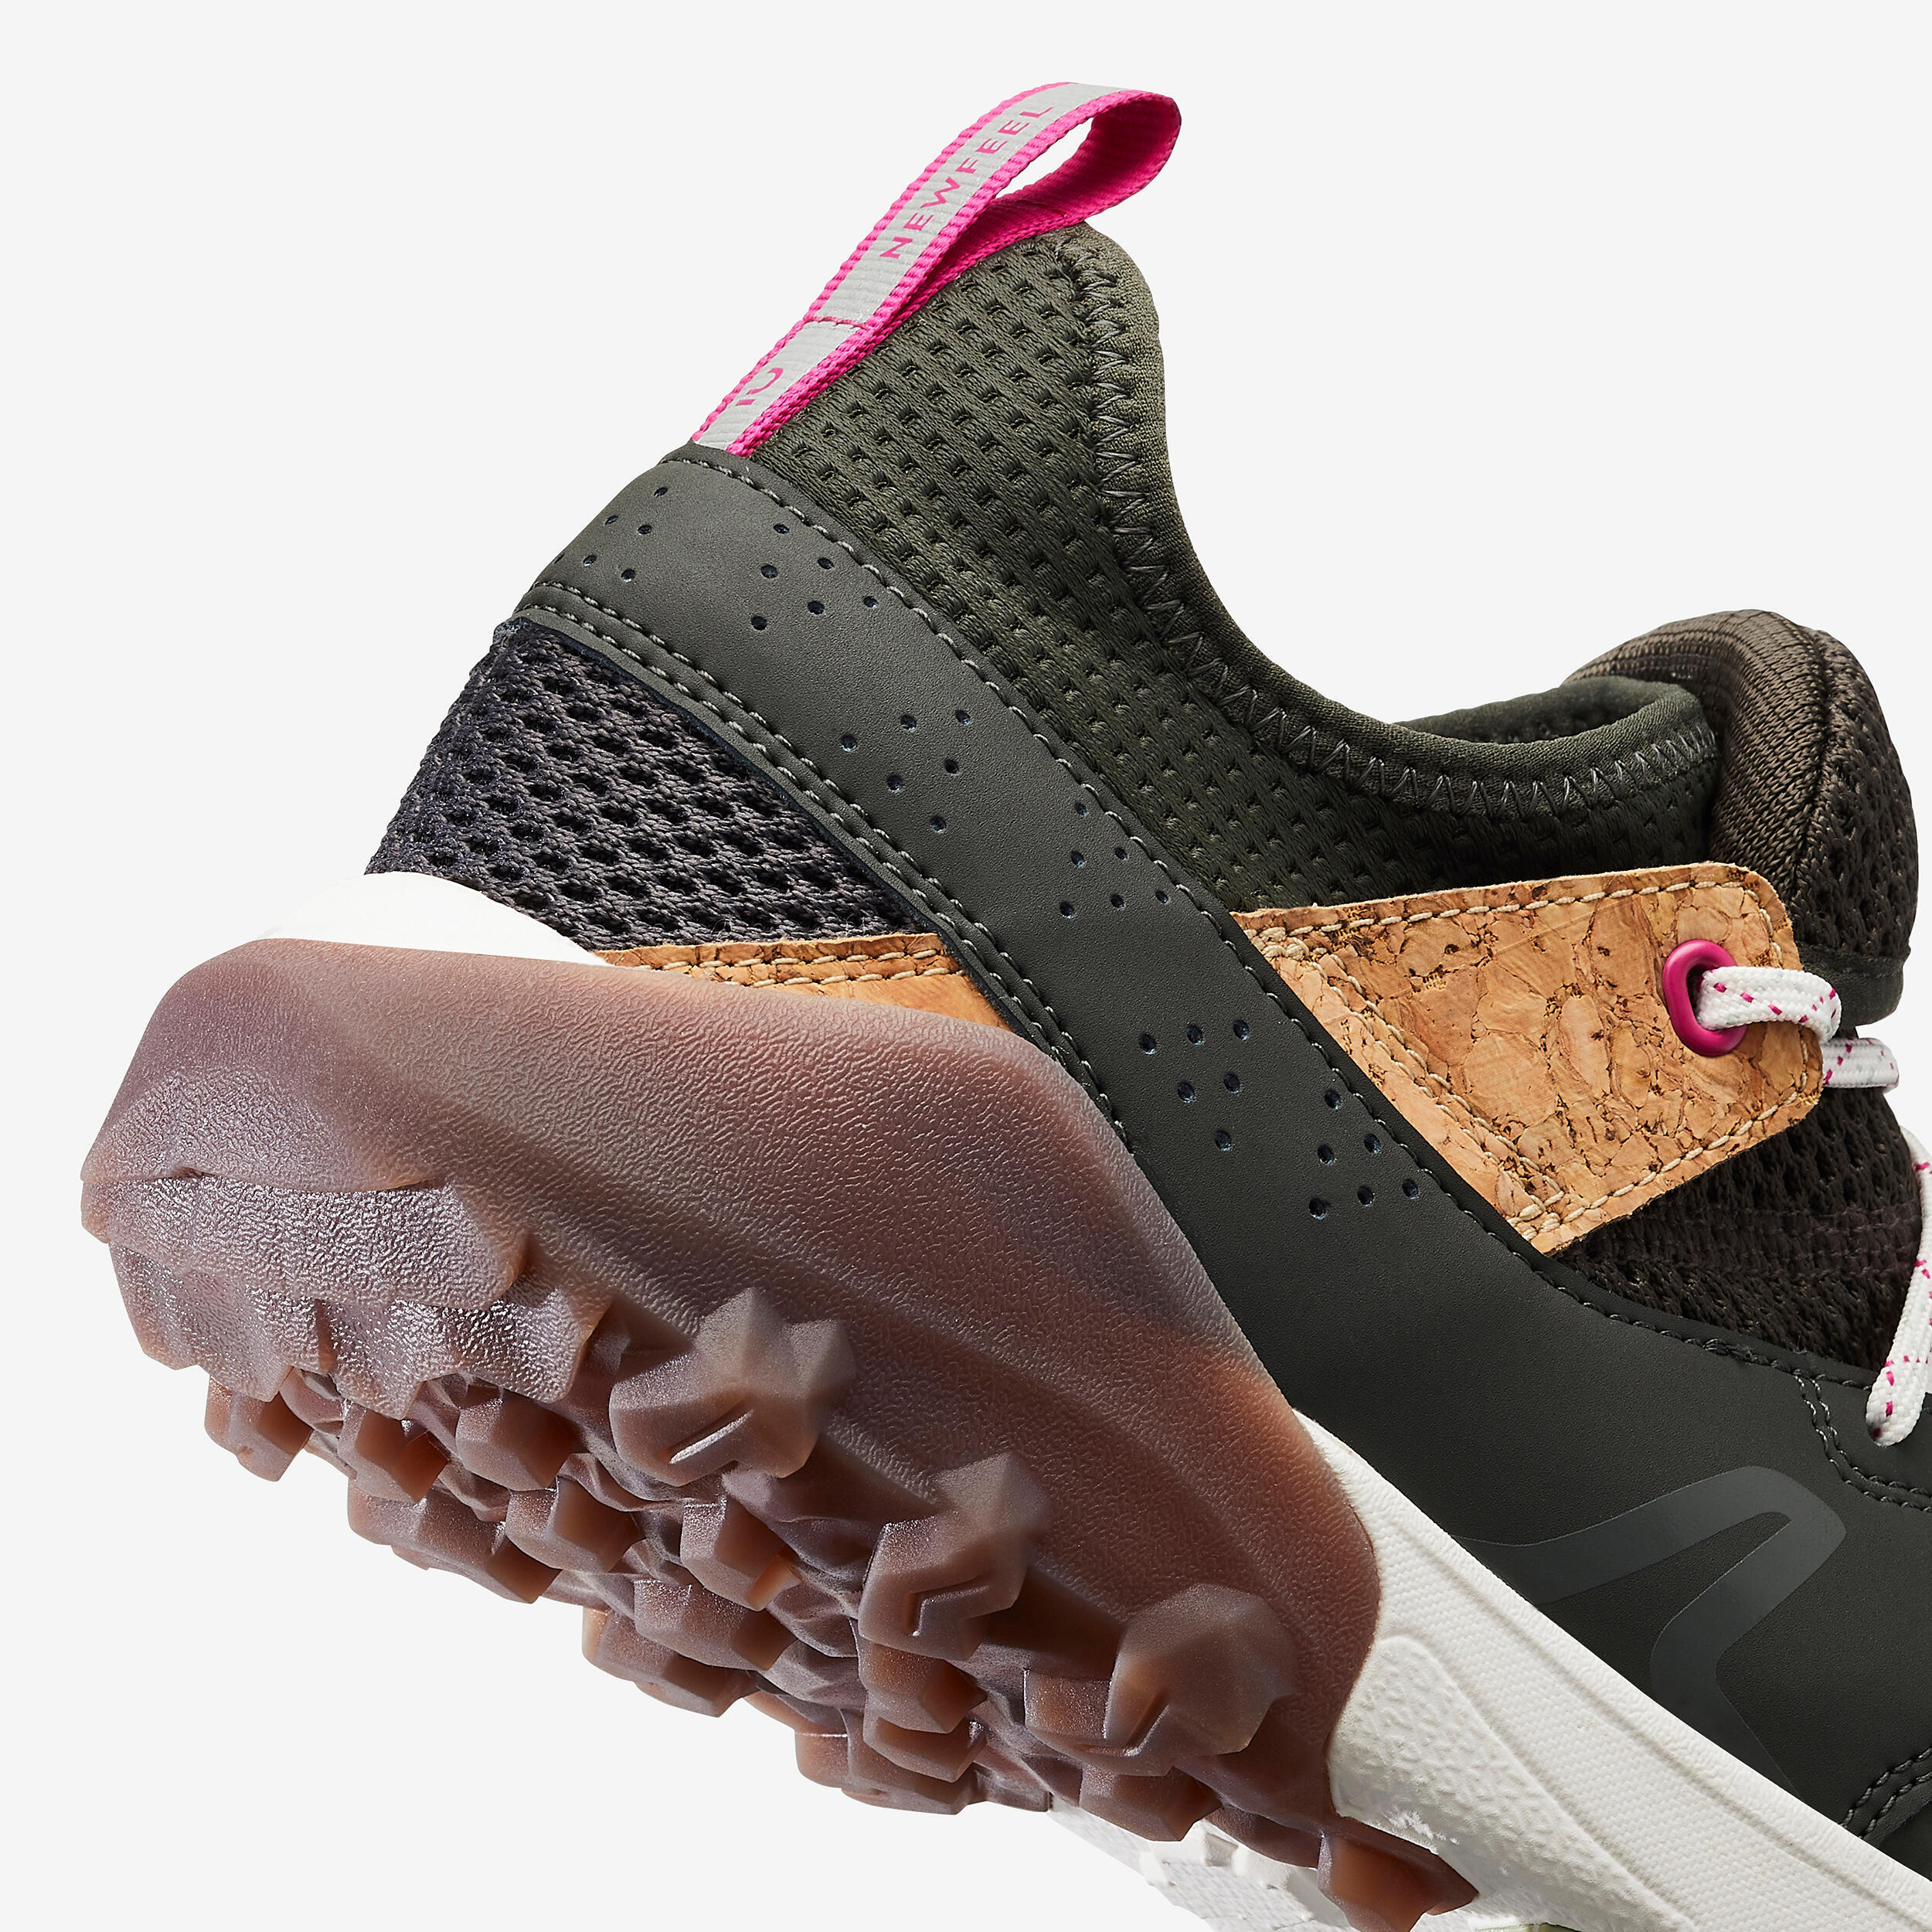 NW 500 breathable Nordic walking shoes - khaki 3/8